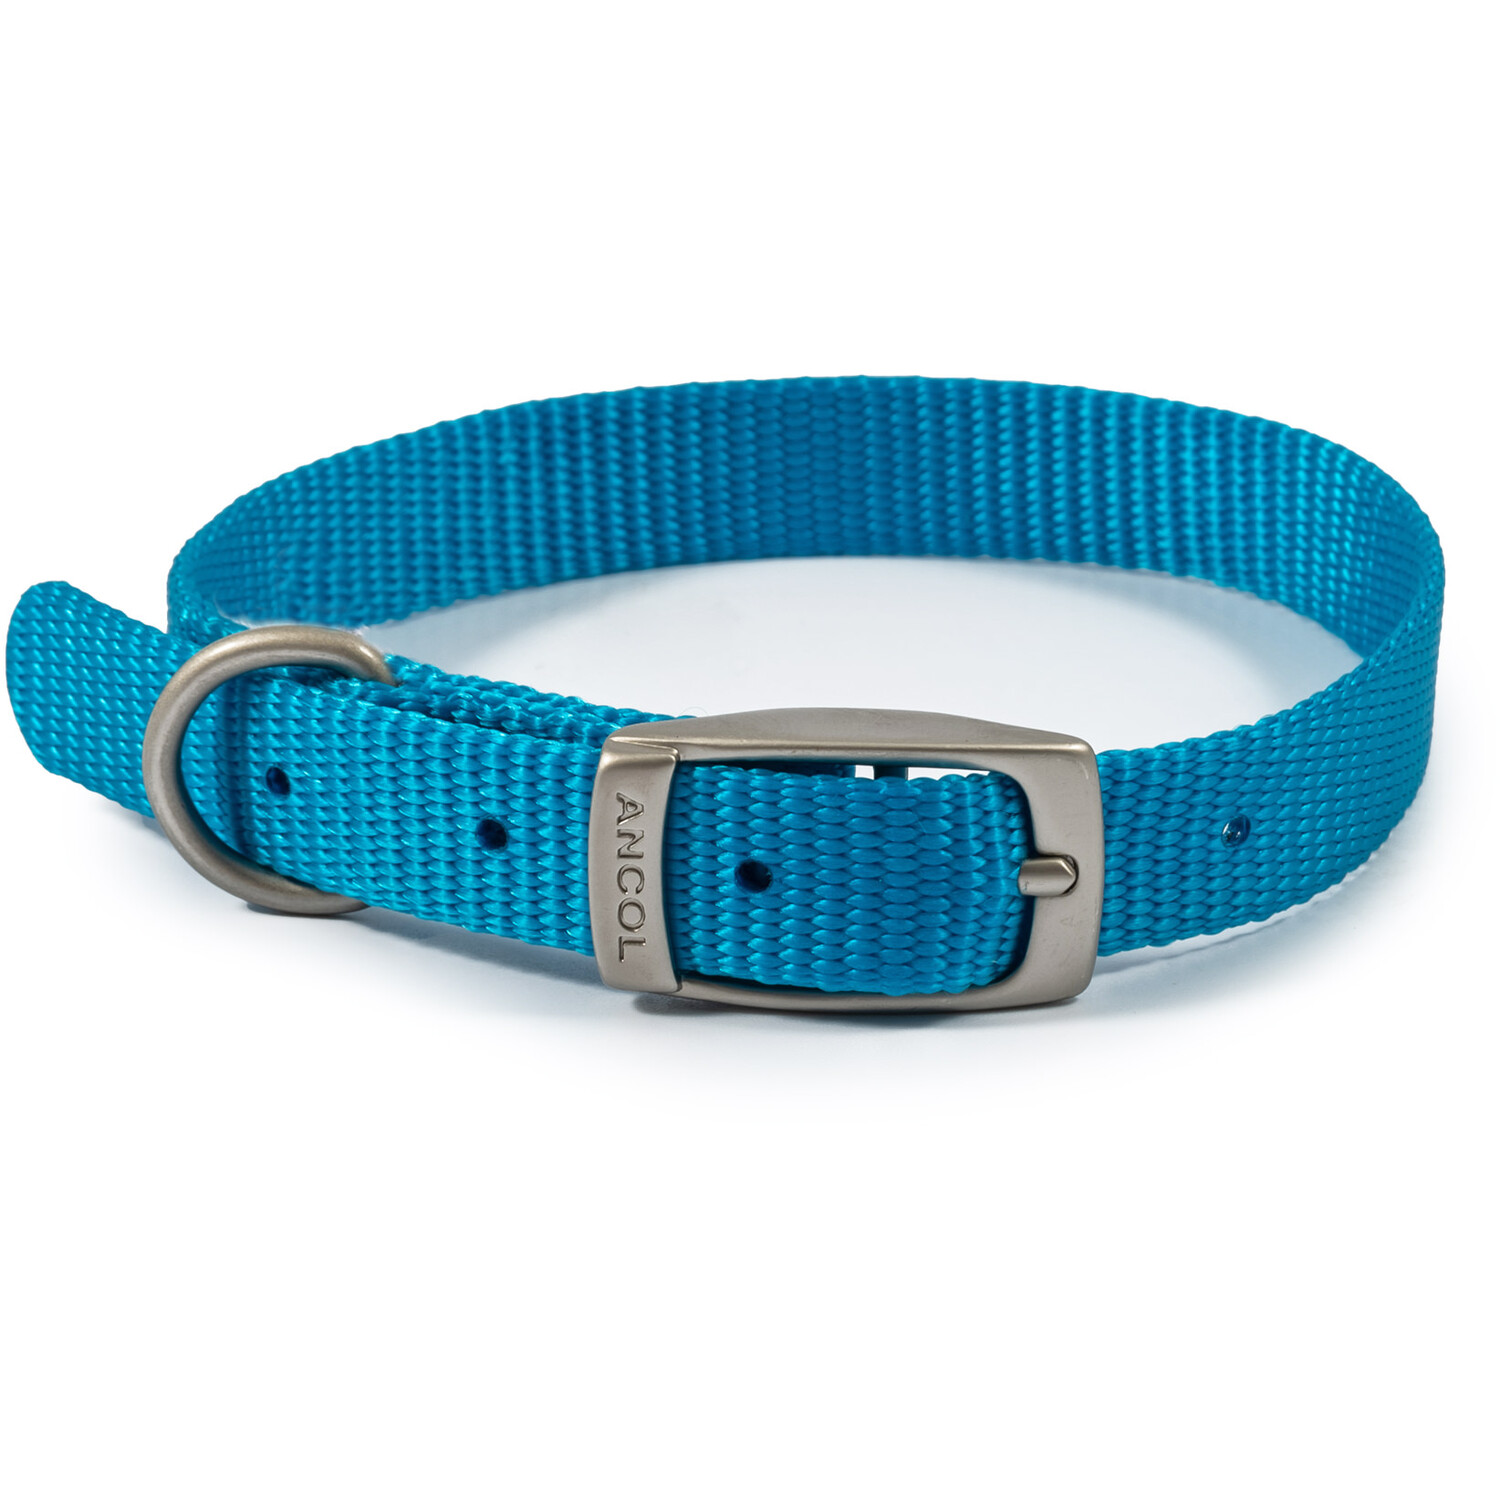 Viva Dog Collar - Blue / 26 - 31cm Neck Image